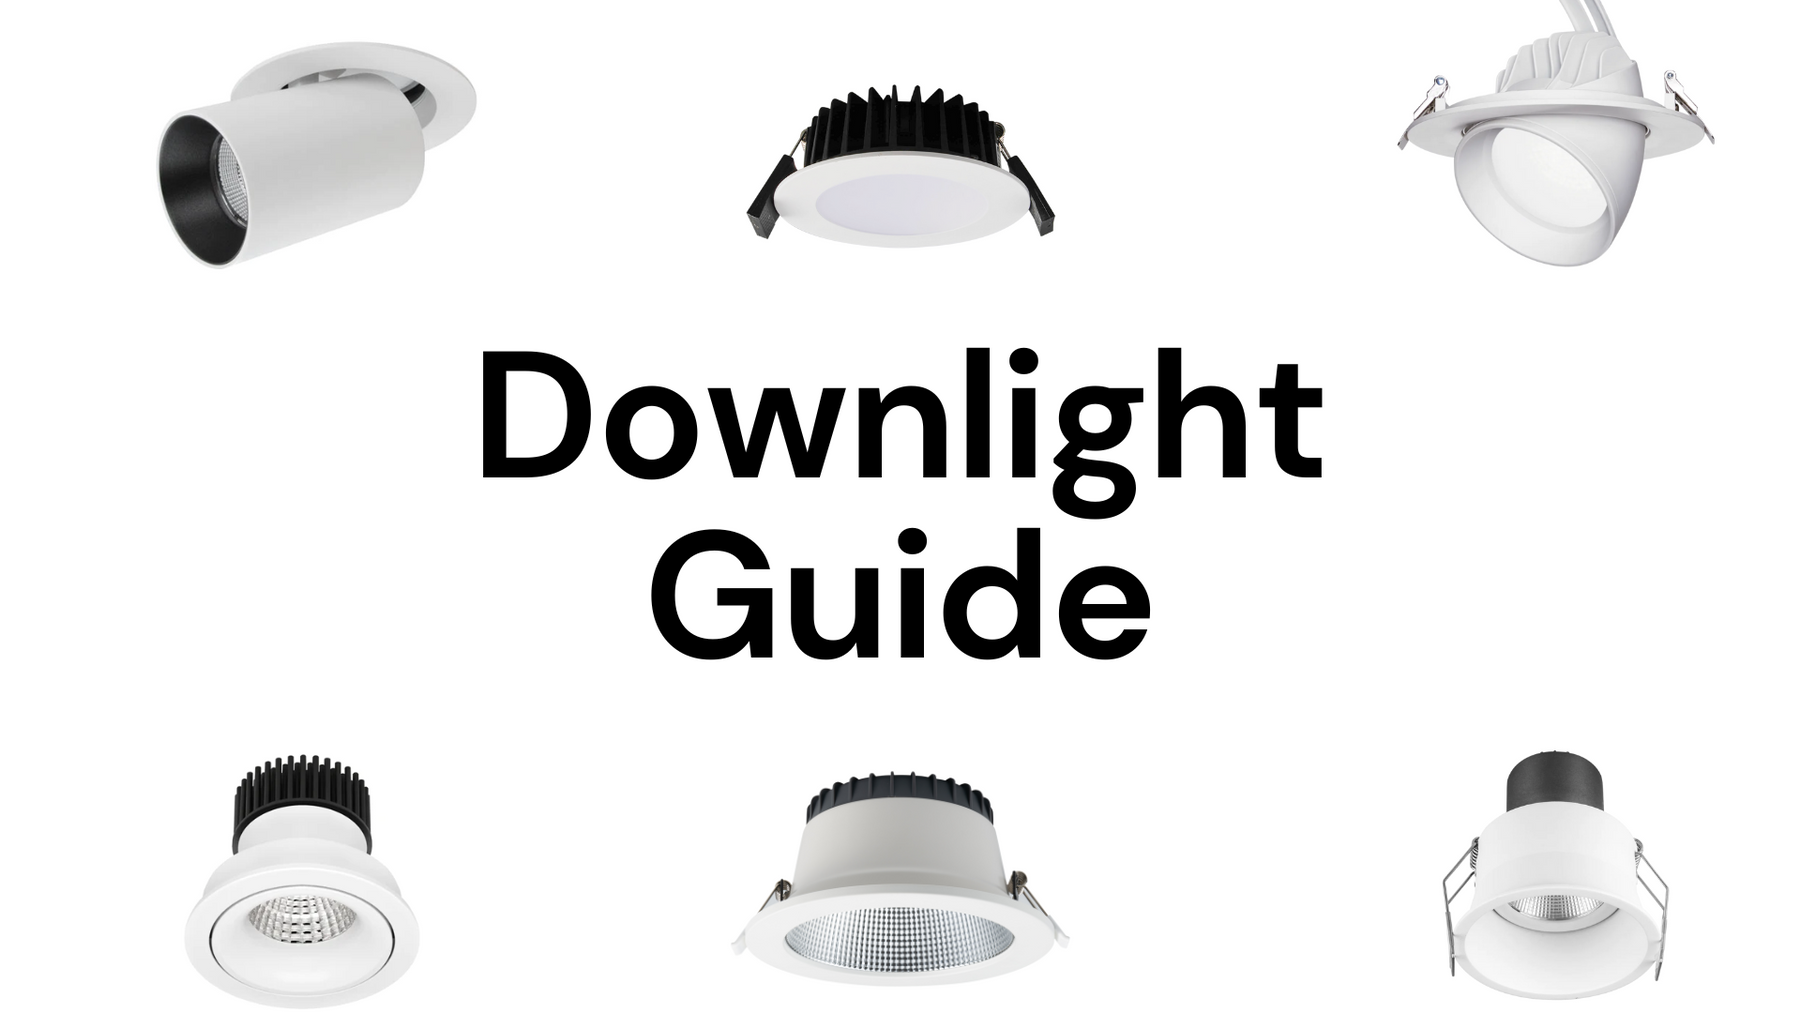 Downlight Guide